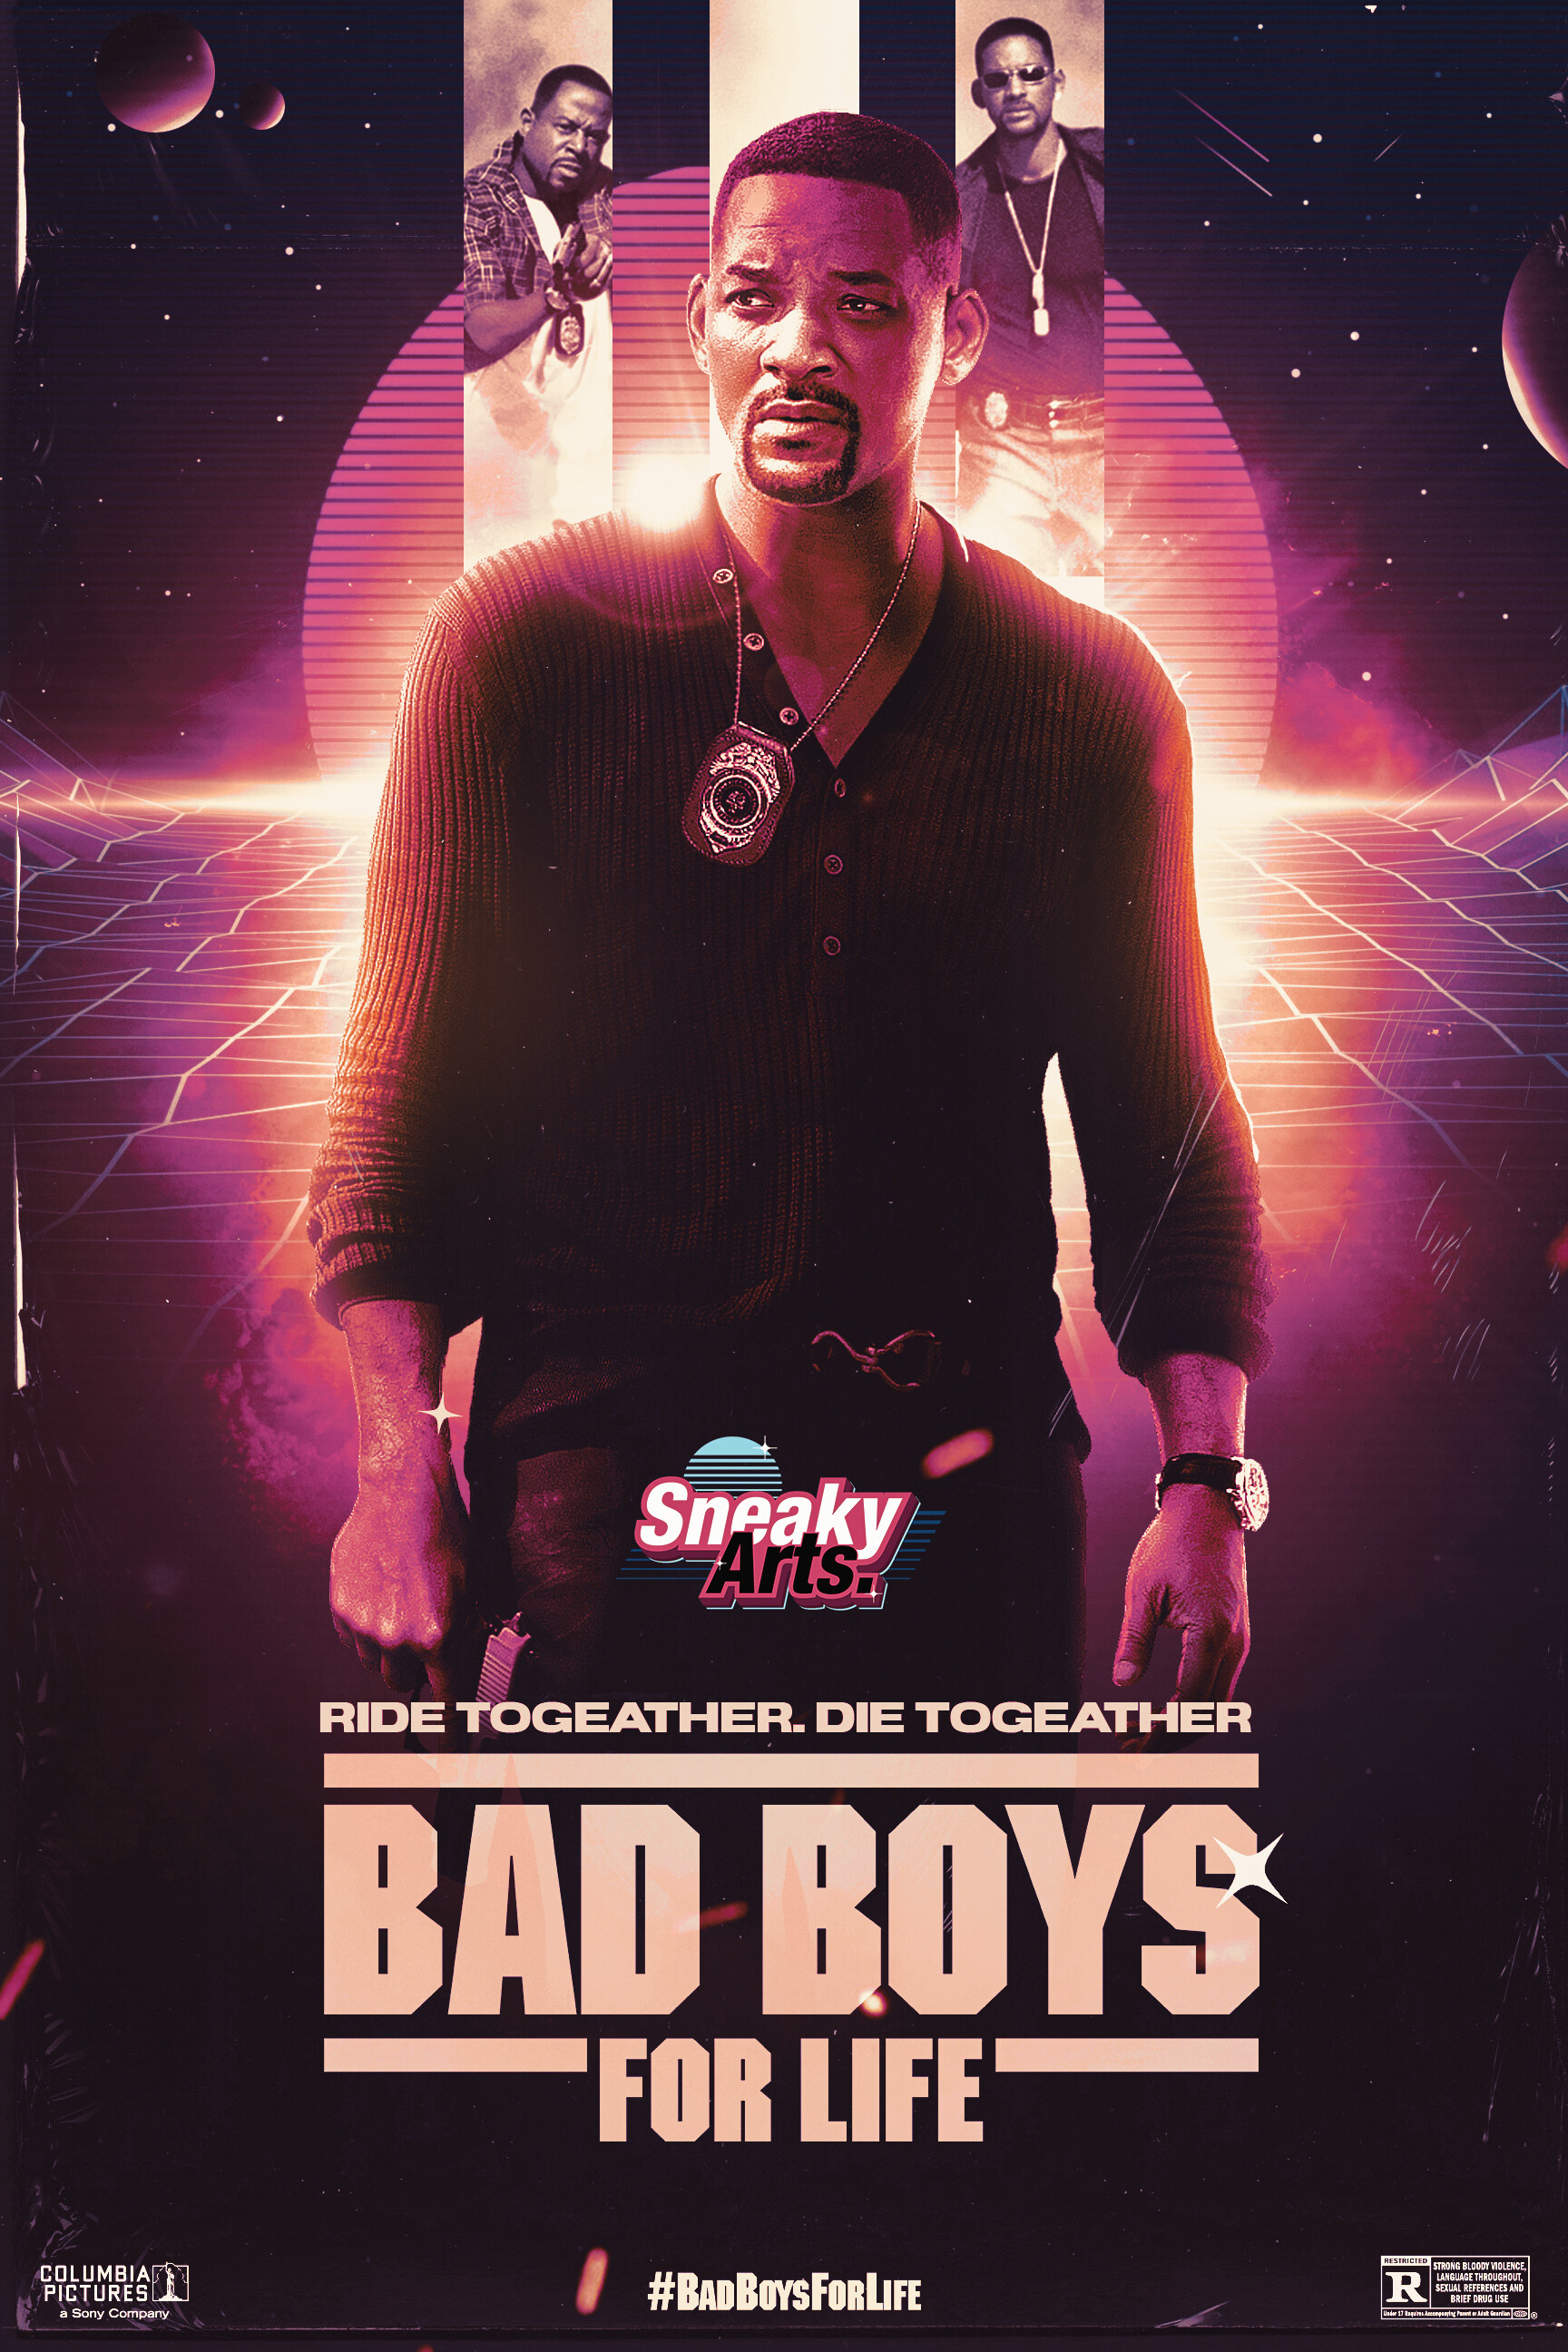 bad boys 3 poster